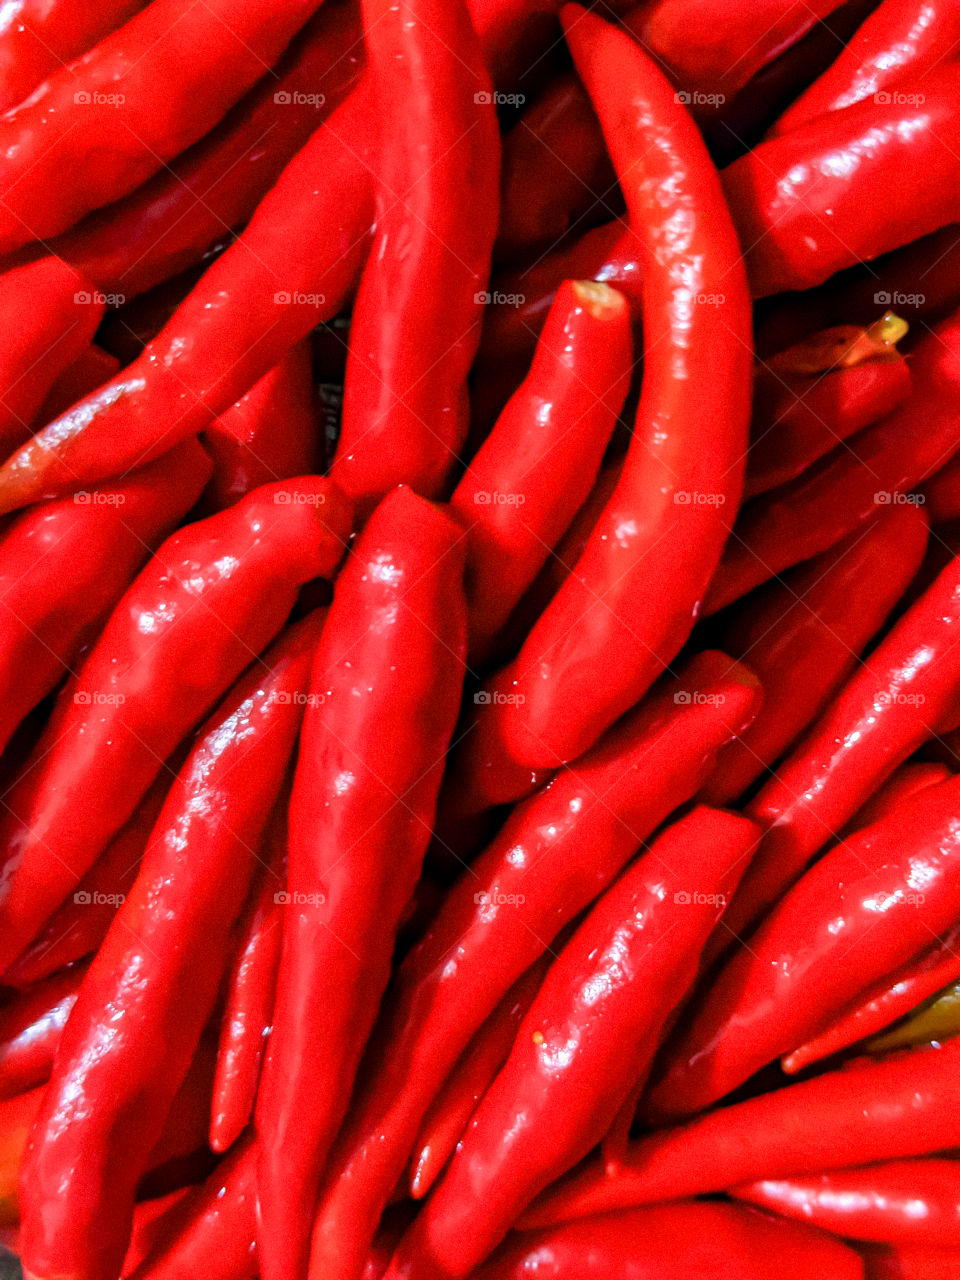 labuyo chilli also sometimes known as Filipino bird's eye, wild chilli. Related cultivars to 'Siling labuyo' include 'Tabasco', 'Malagueta', and 'Peri-peri'